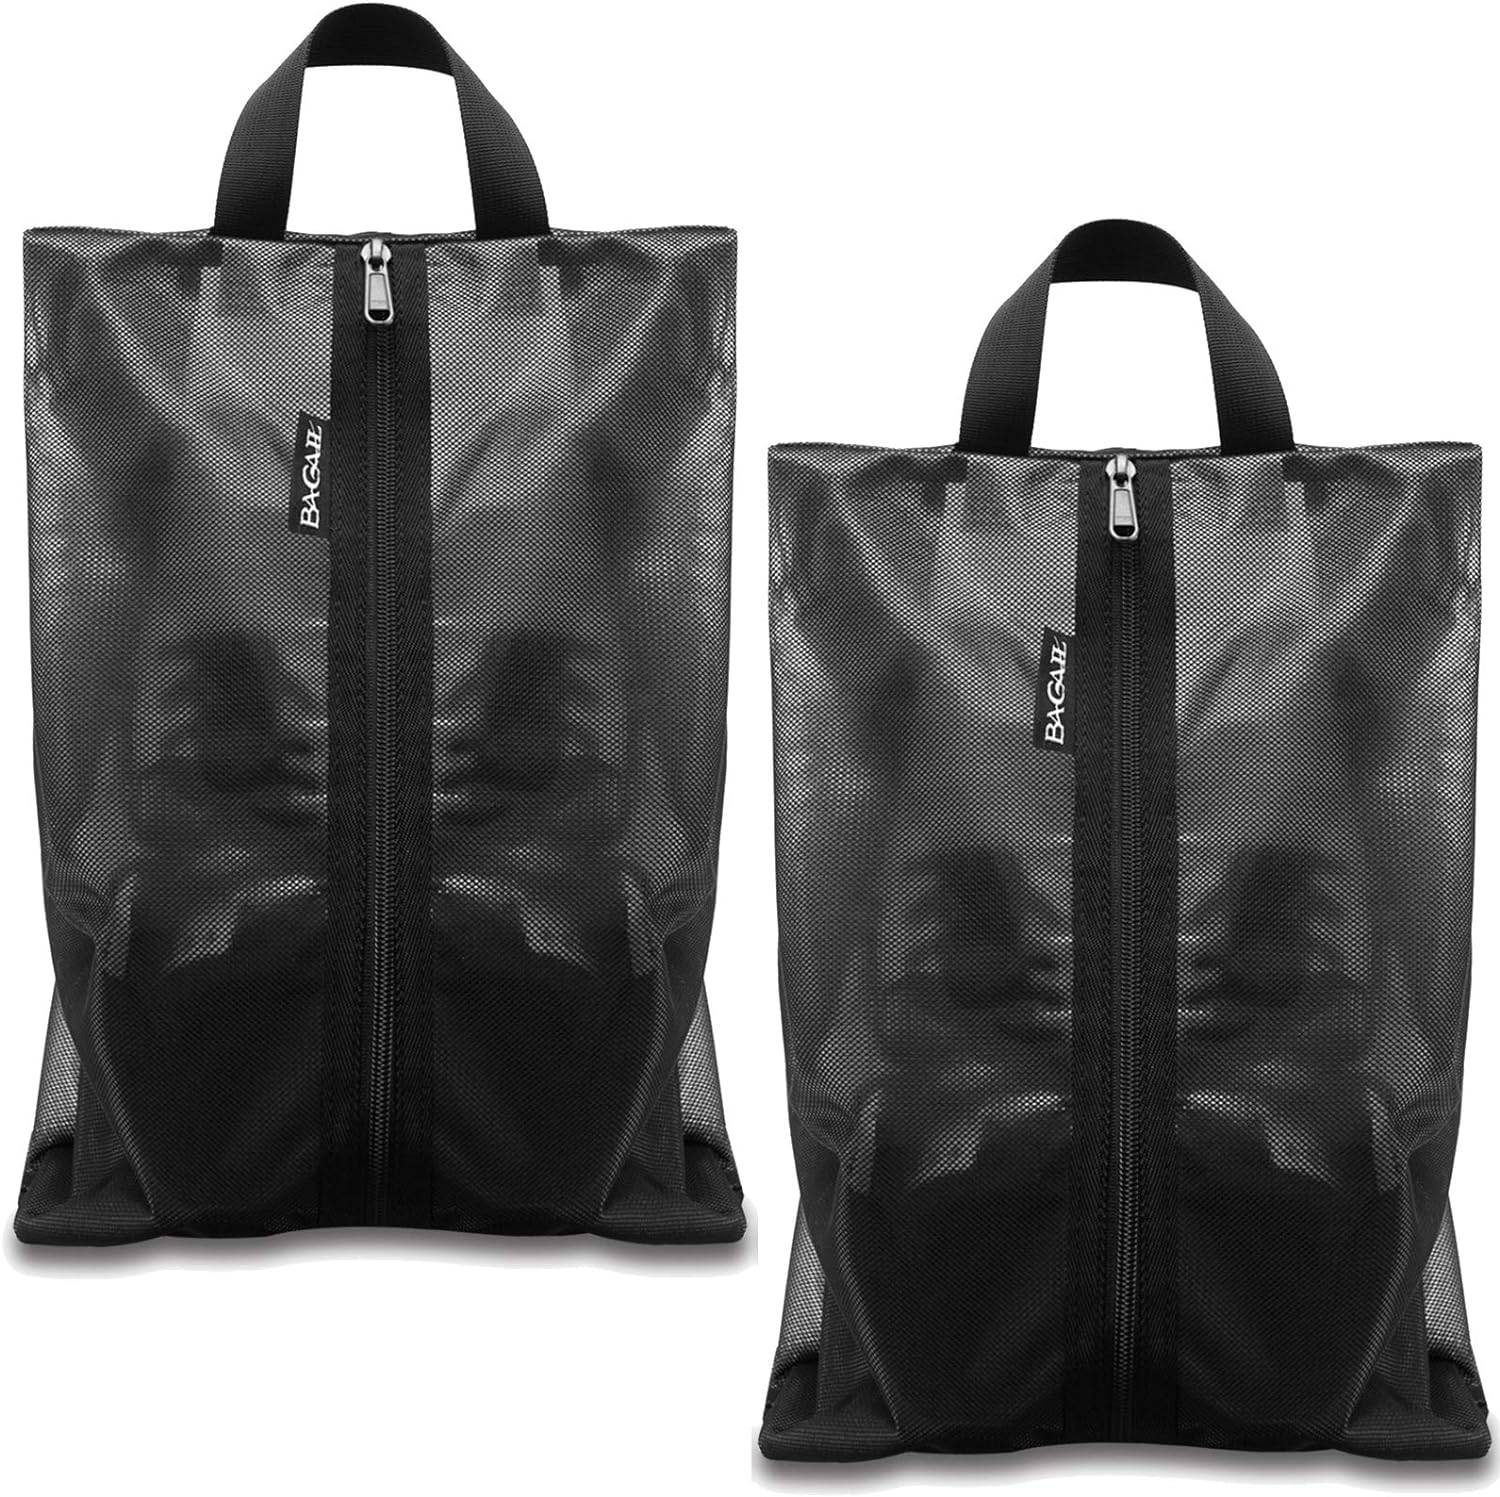 30 Pcs Travel Storage Bags For Clothes,Reusable Plastic Ziplock Bags For